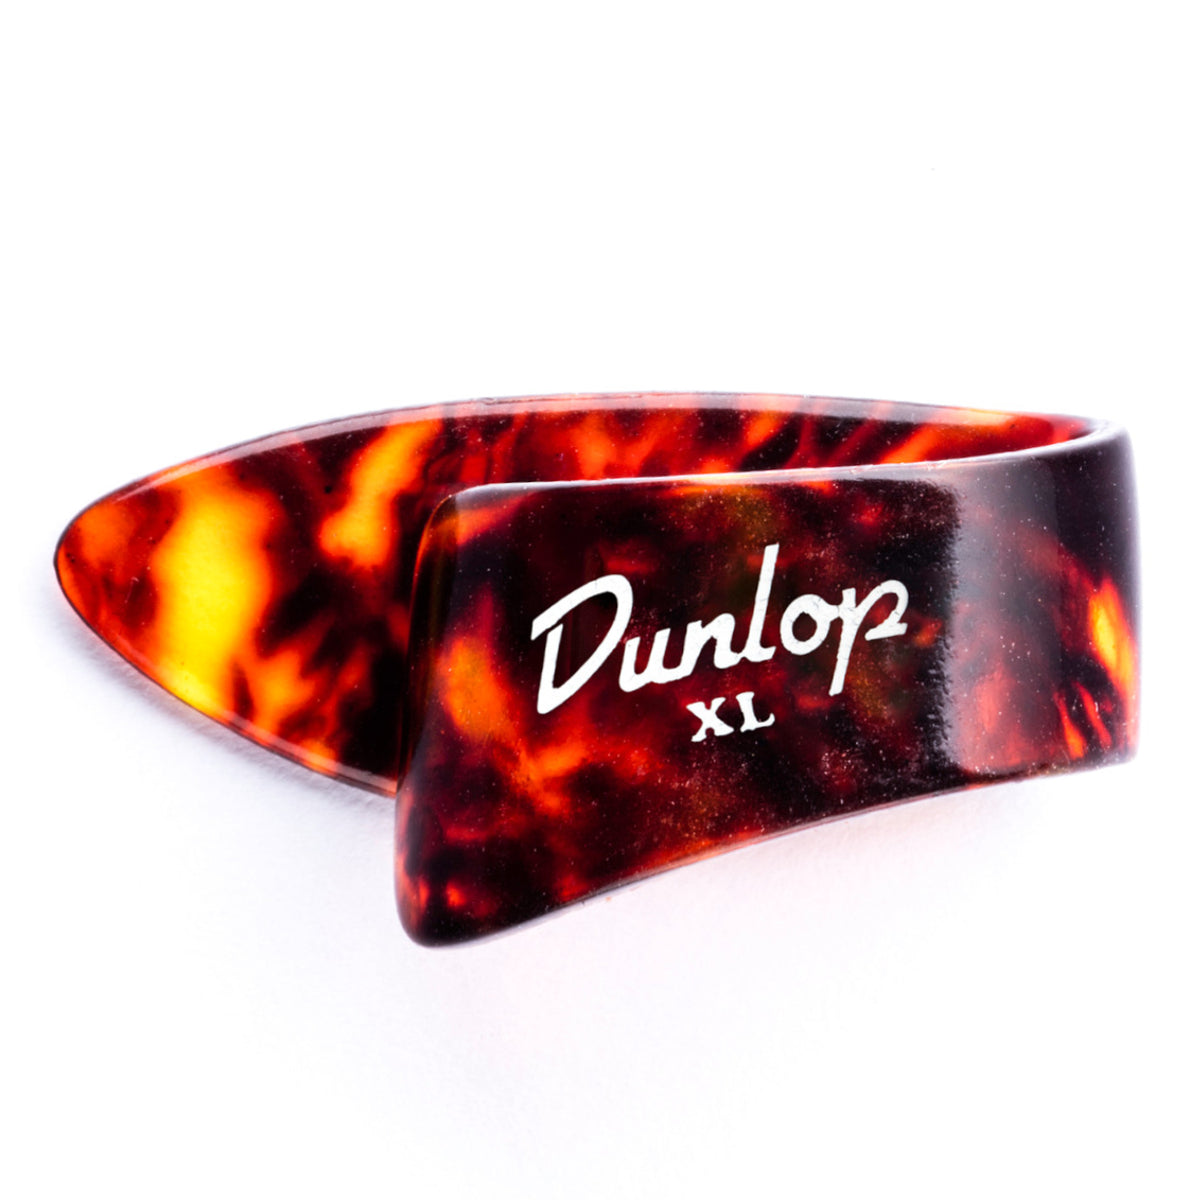 Dunlop Shell  X-Large Thumbpick - EACH 9024